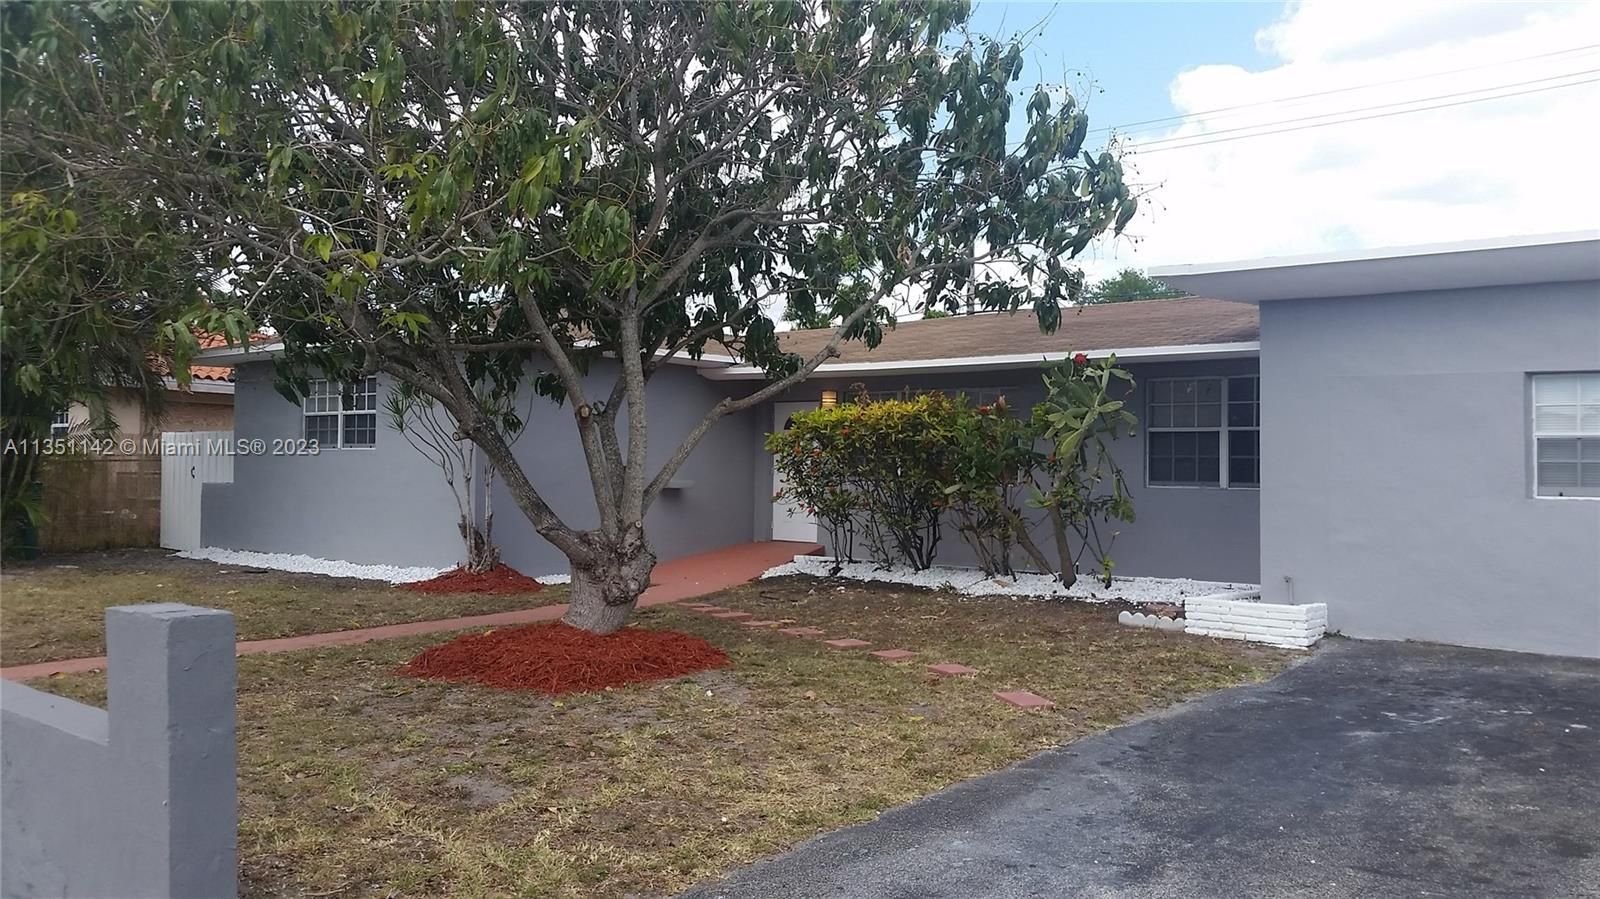 Real estate property located at 775 180th St, Miami-Dade County, Miami, FL